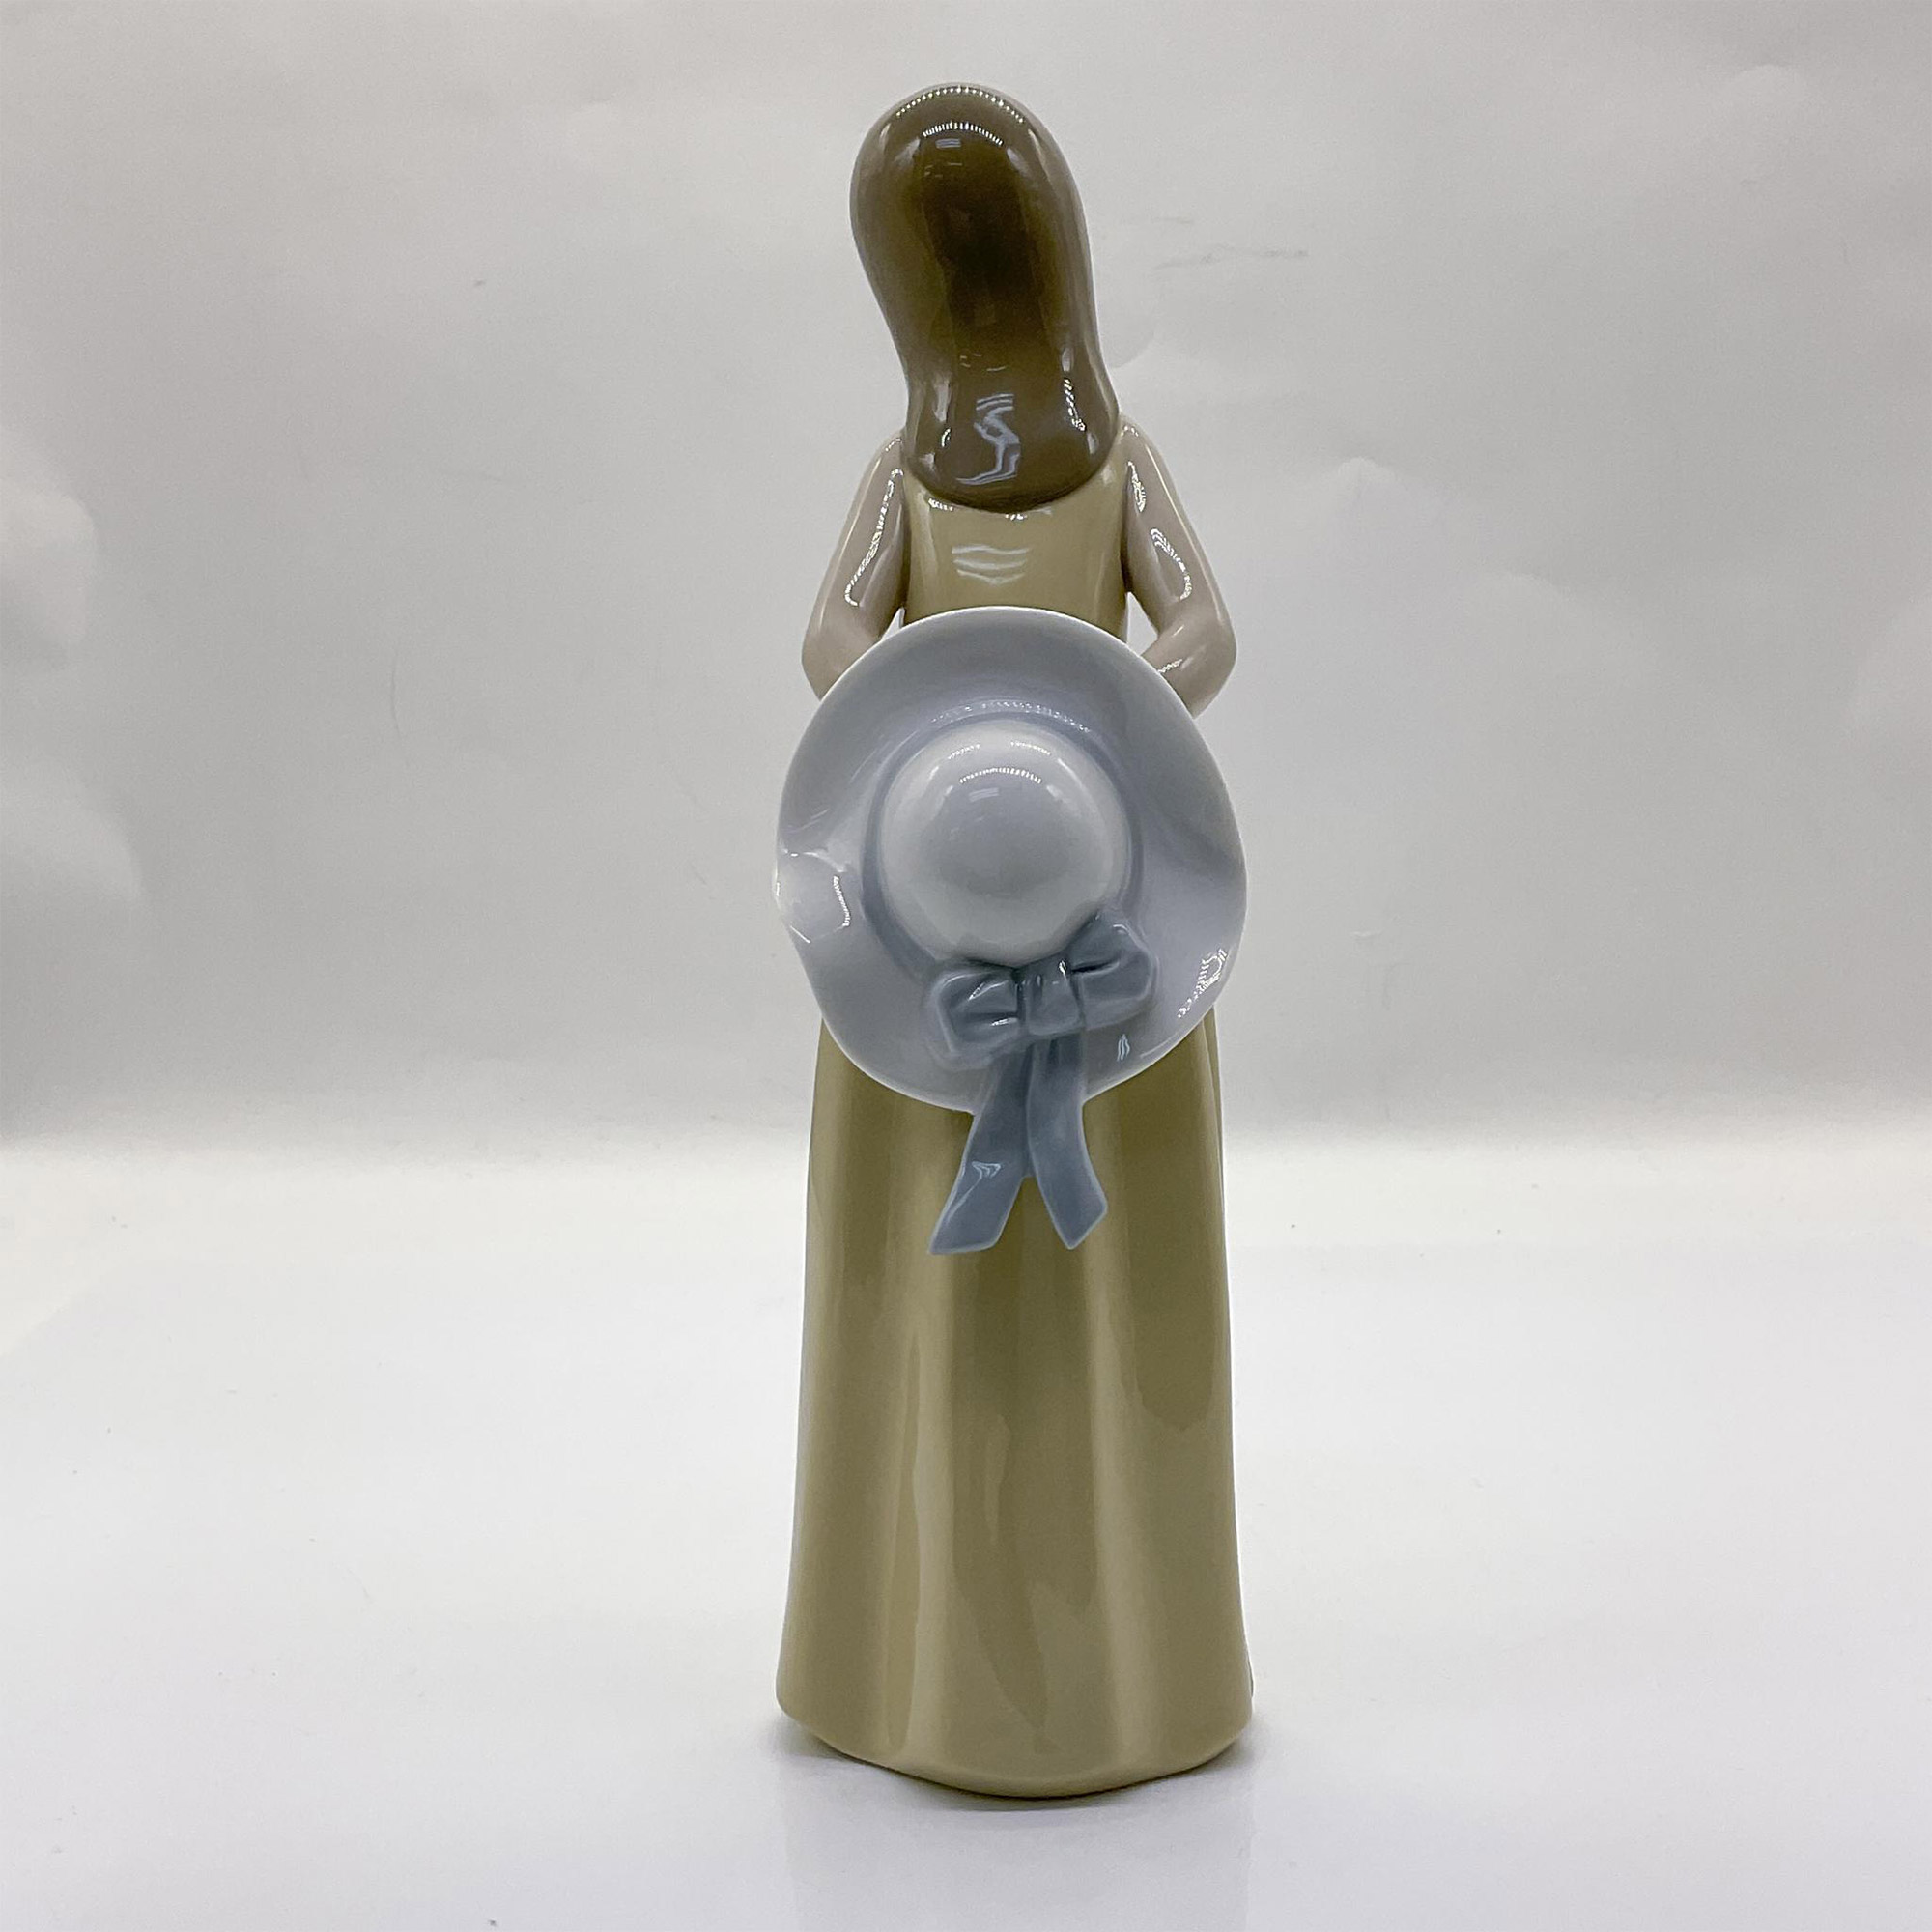 Naughty 1005006 - Lladro Porcelain Figurine - Image 2 of 3